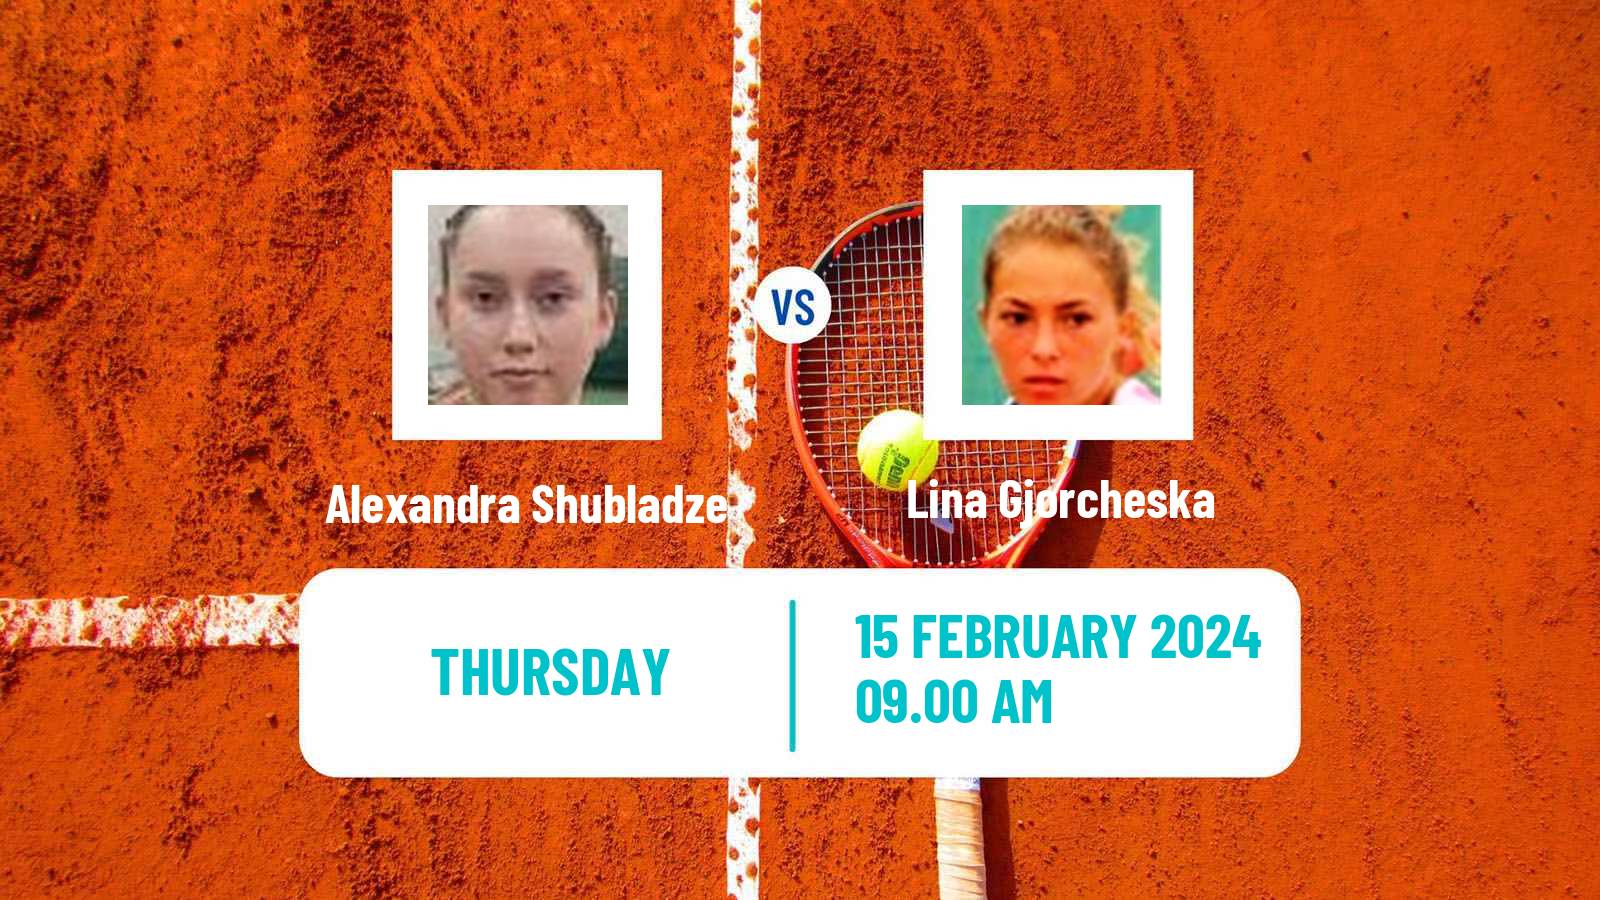 Tennis ITF W35 Antalya 3 Women Alexandra Shubladze - Lina Gjorcheska